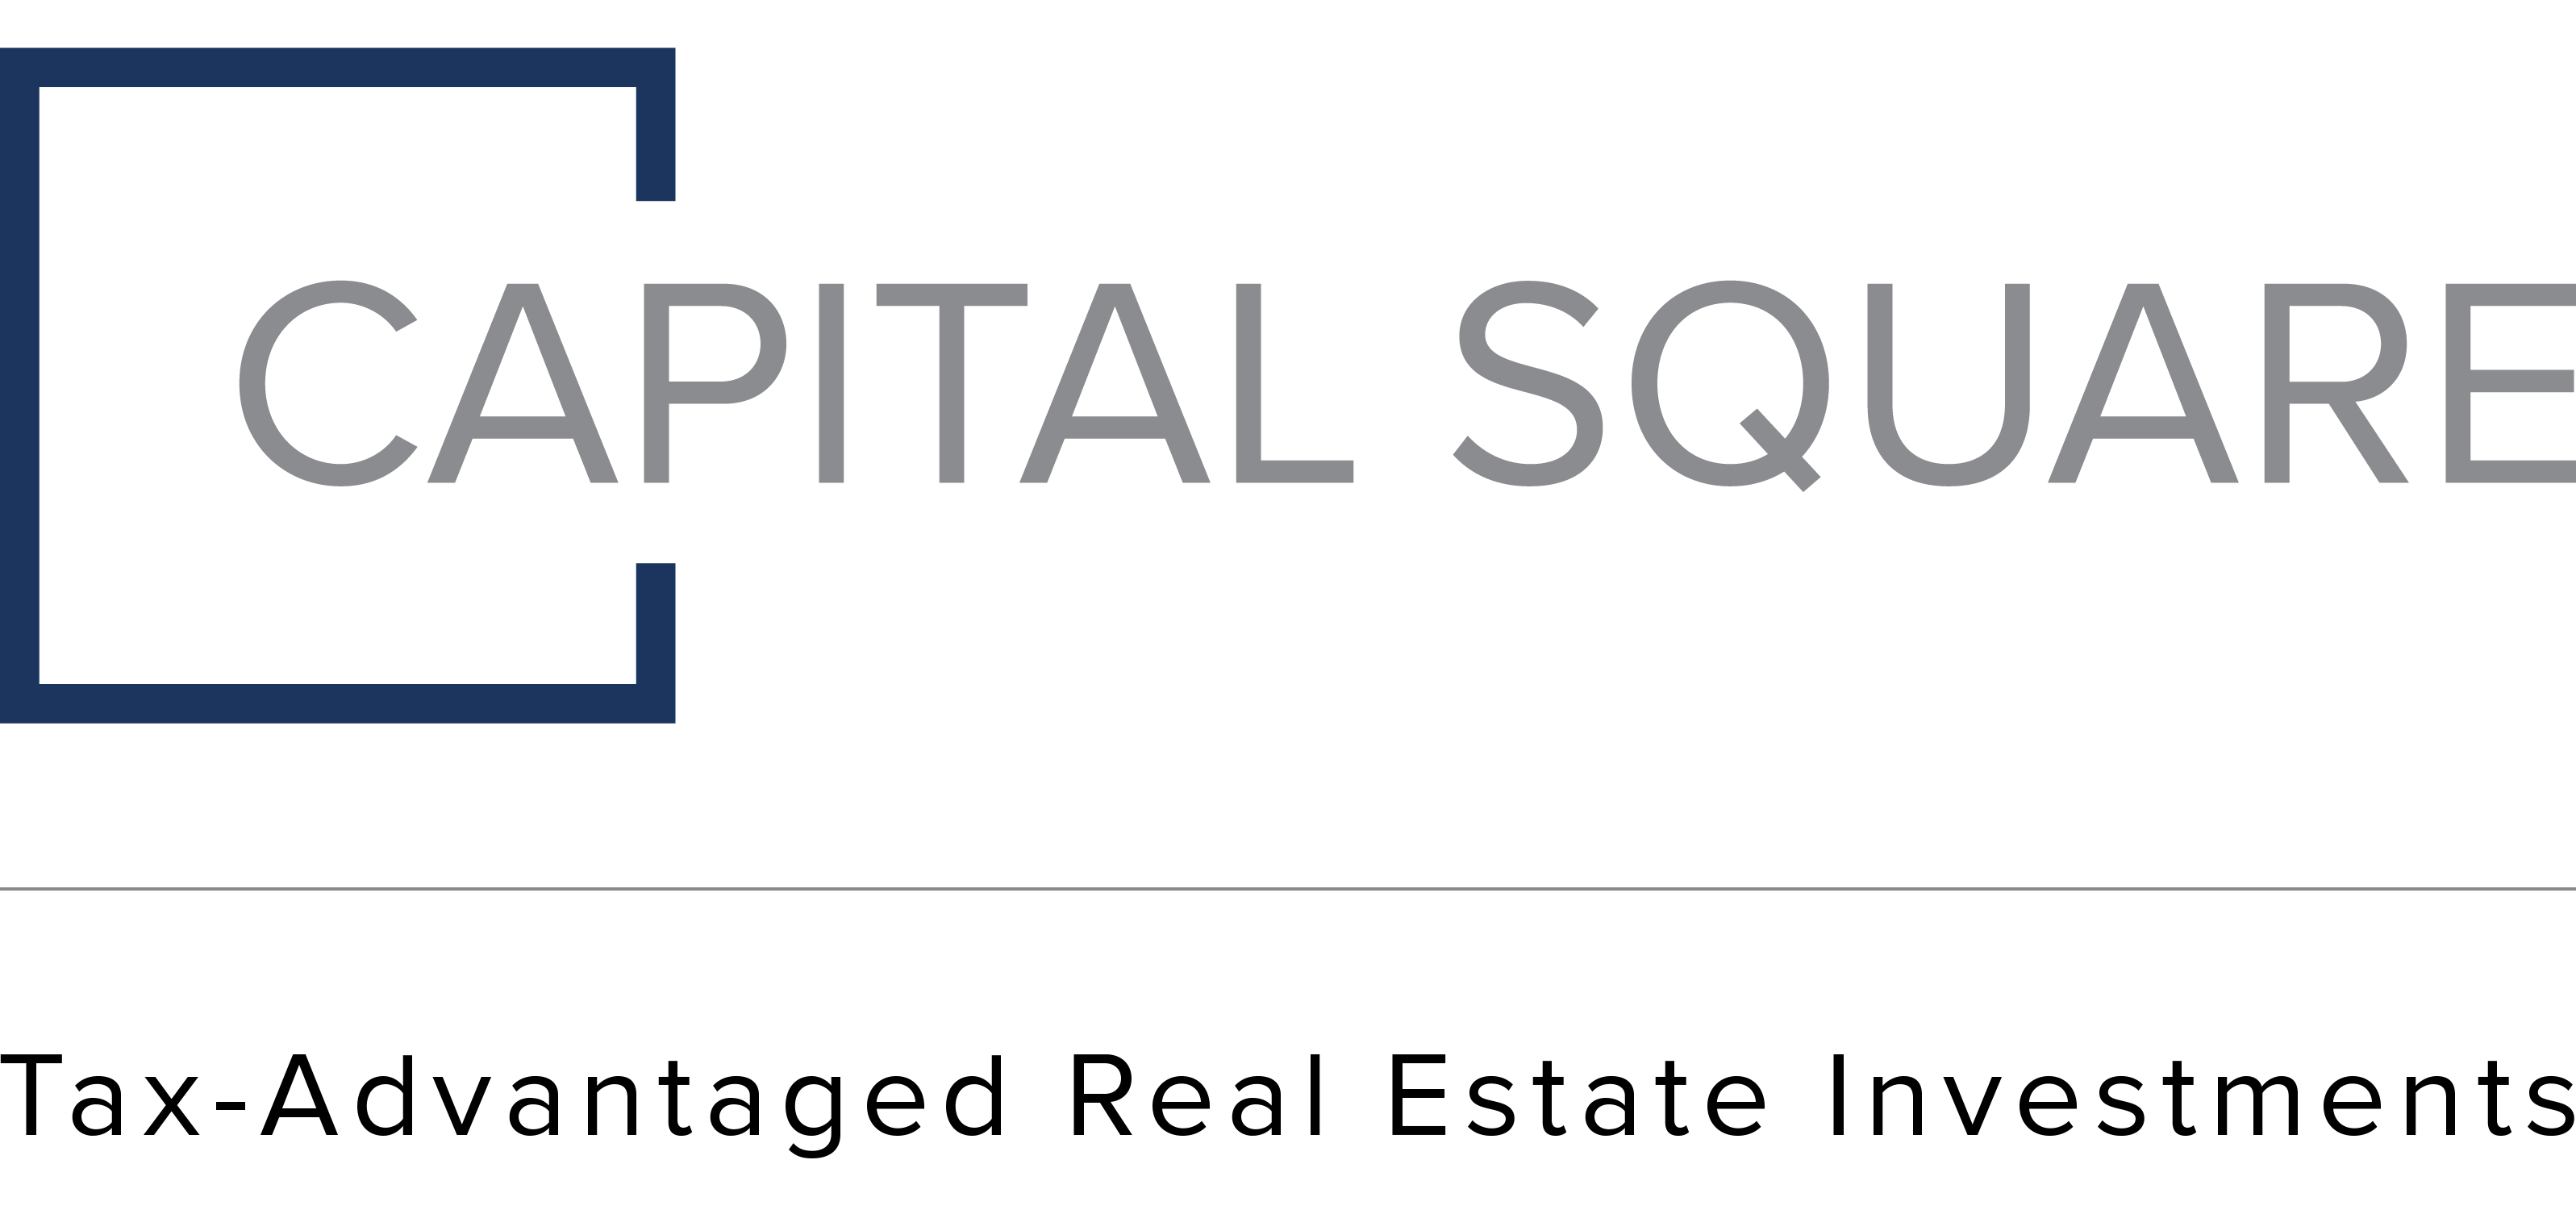 Capital square NEW logo